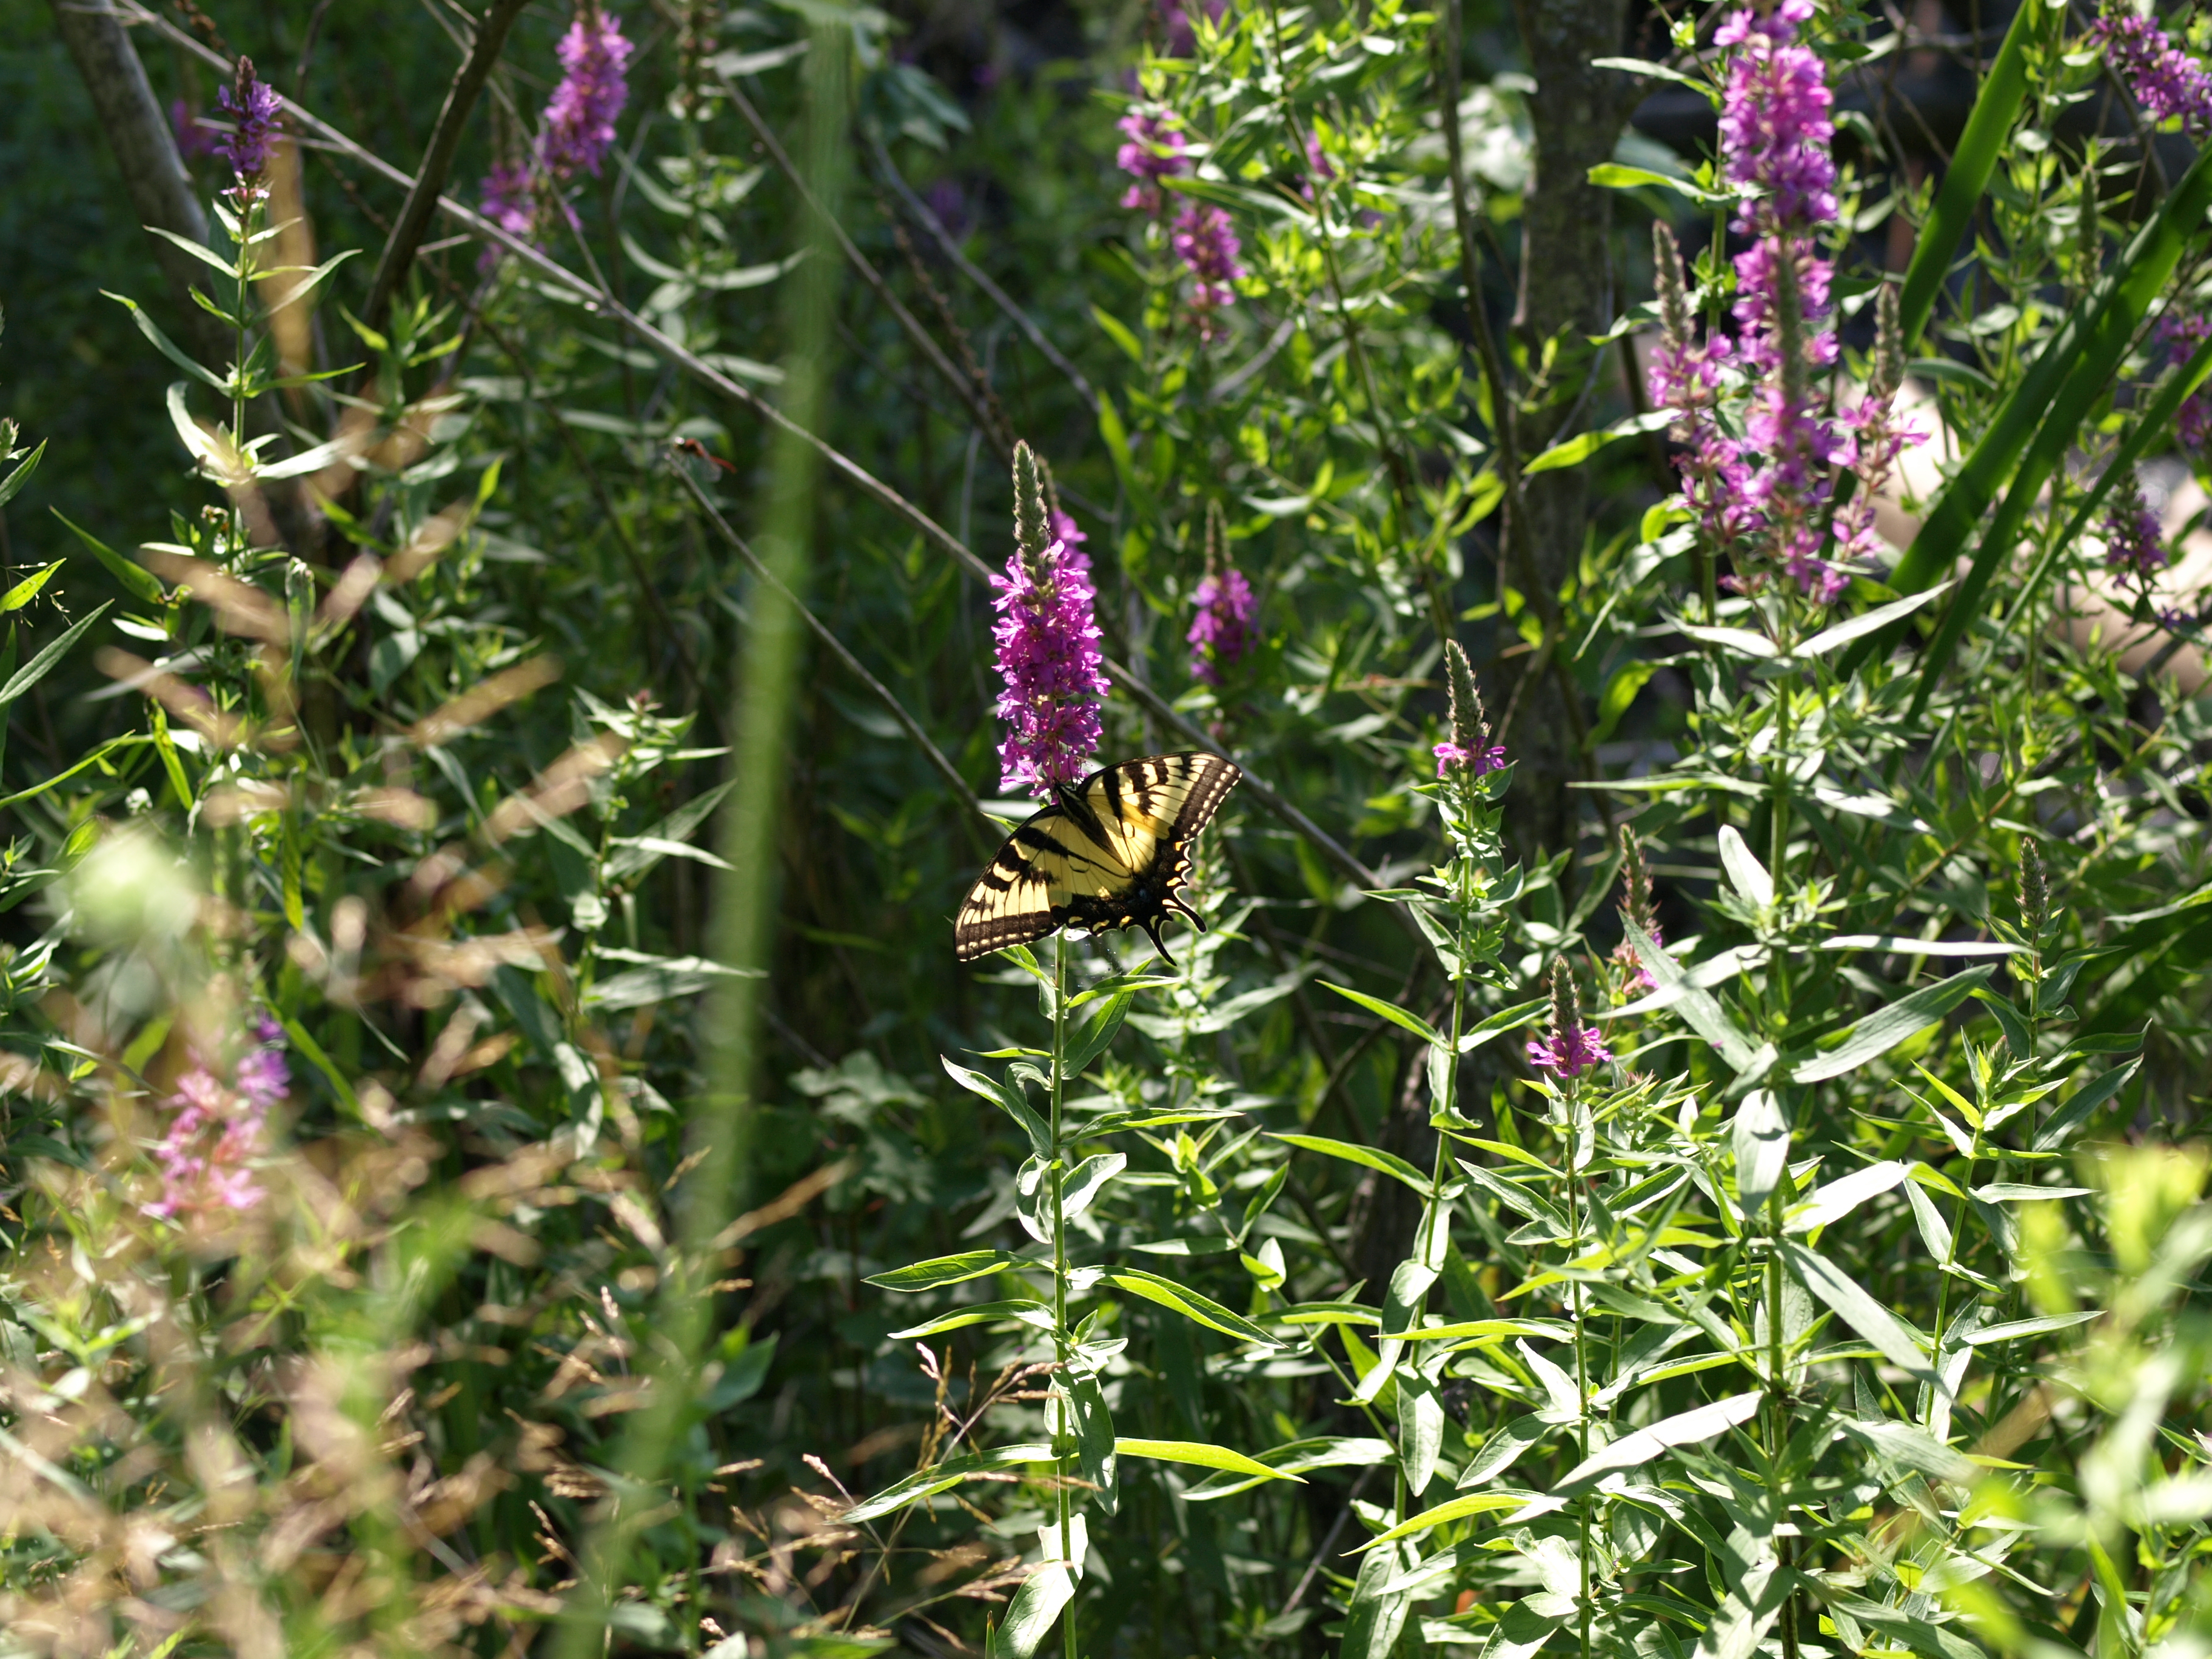 Swallowtail butterfly #2